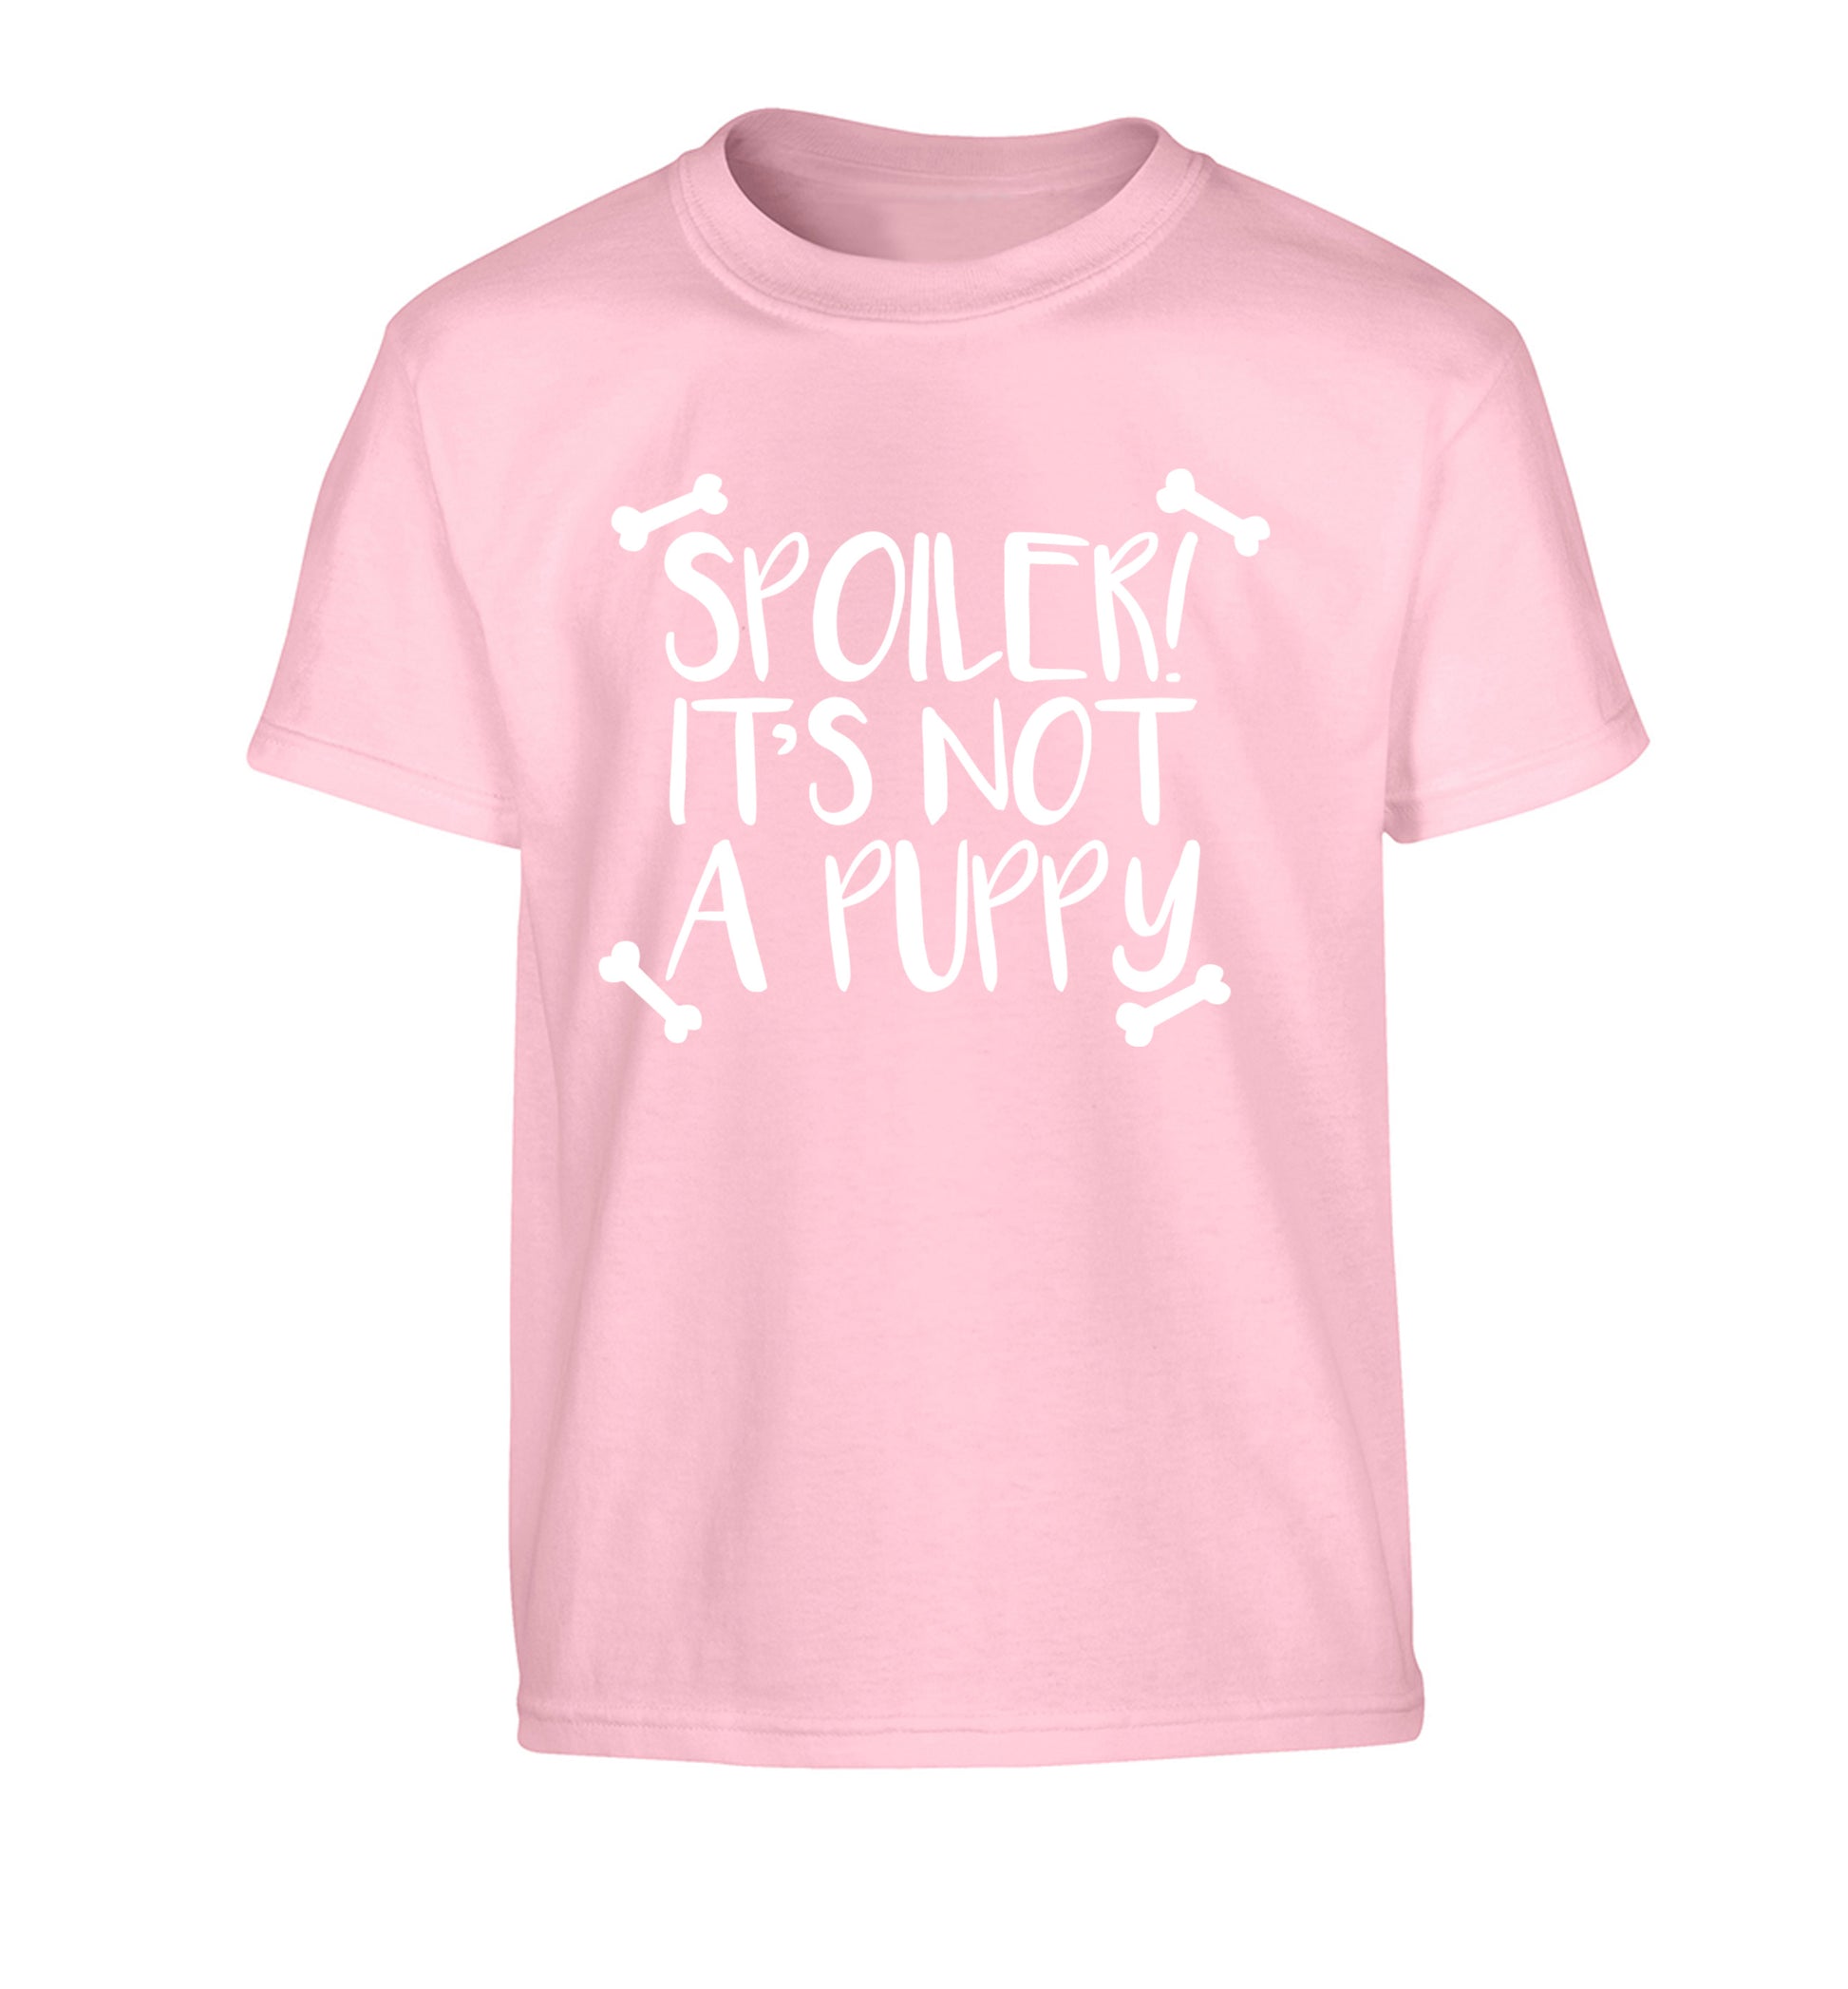 Spoiler it's not a puppy Children's light pink Tshirt 12-13 Years